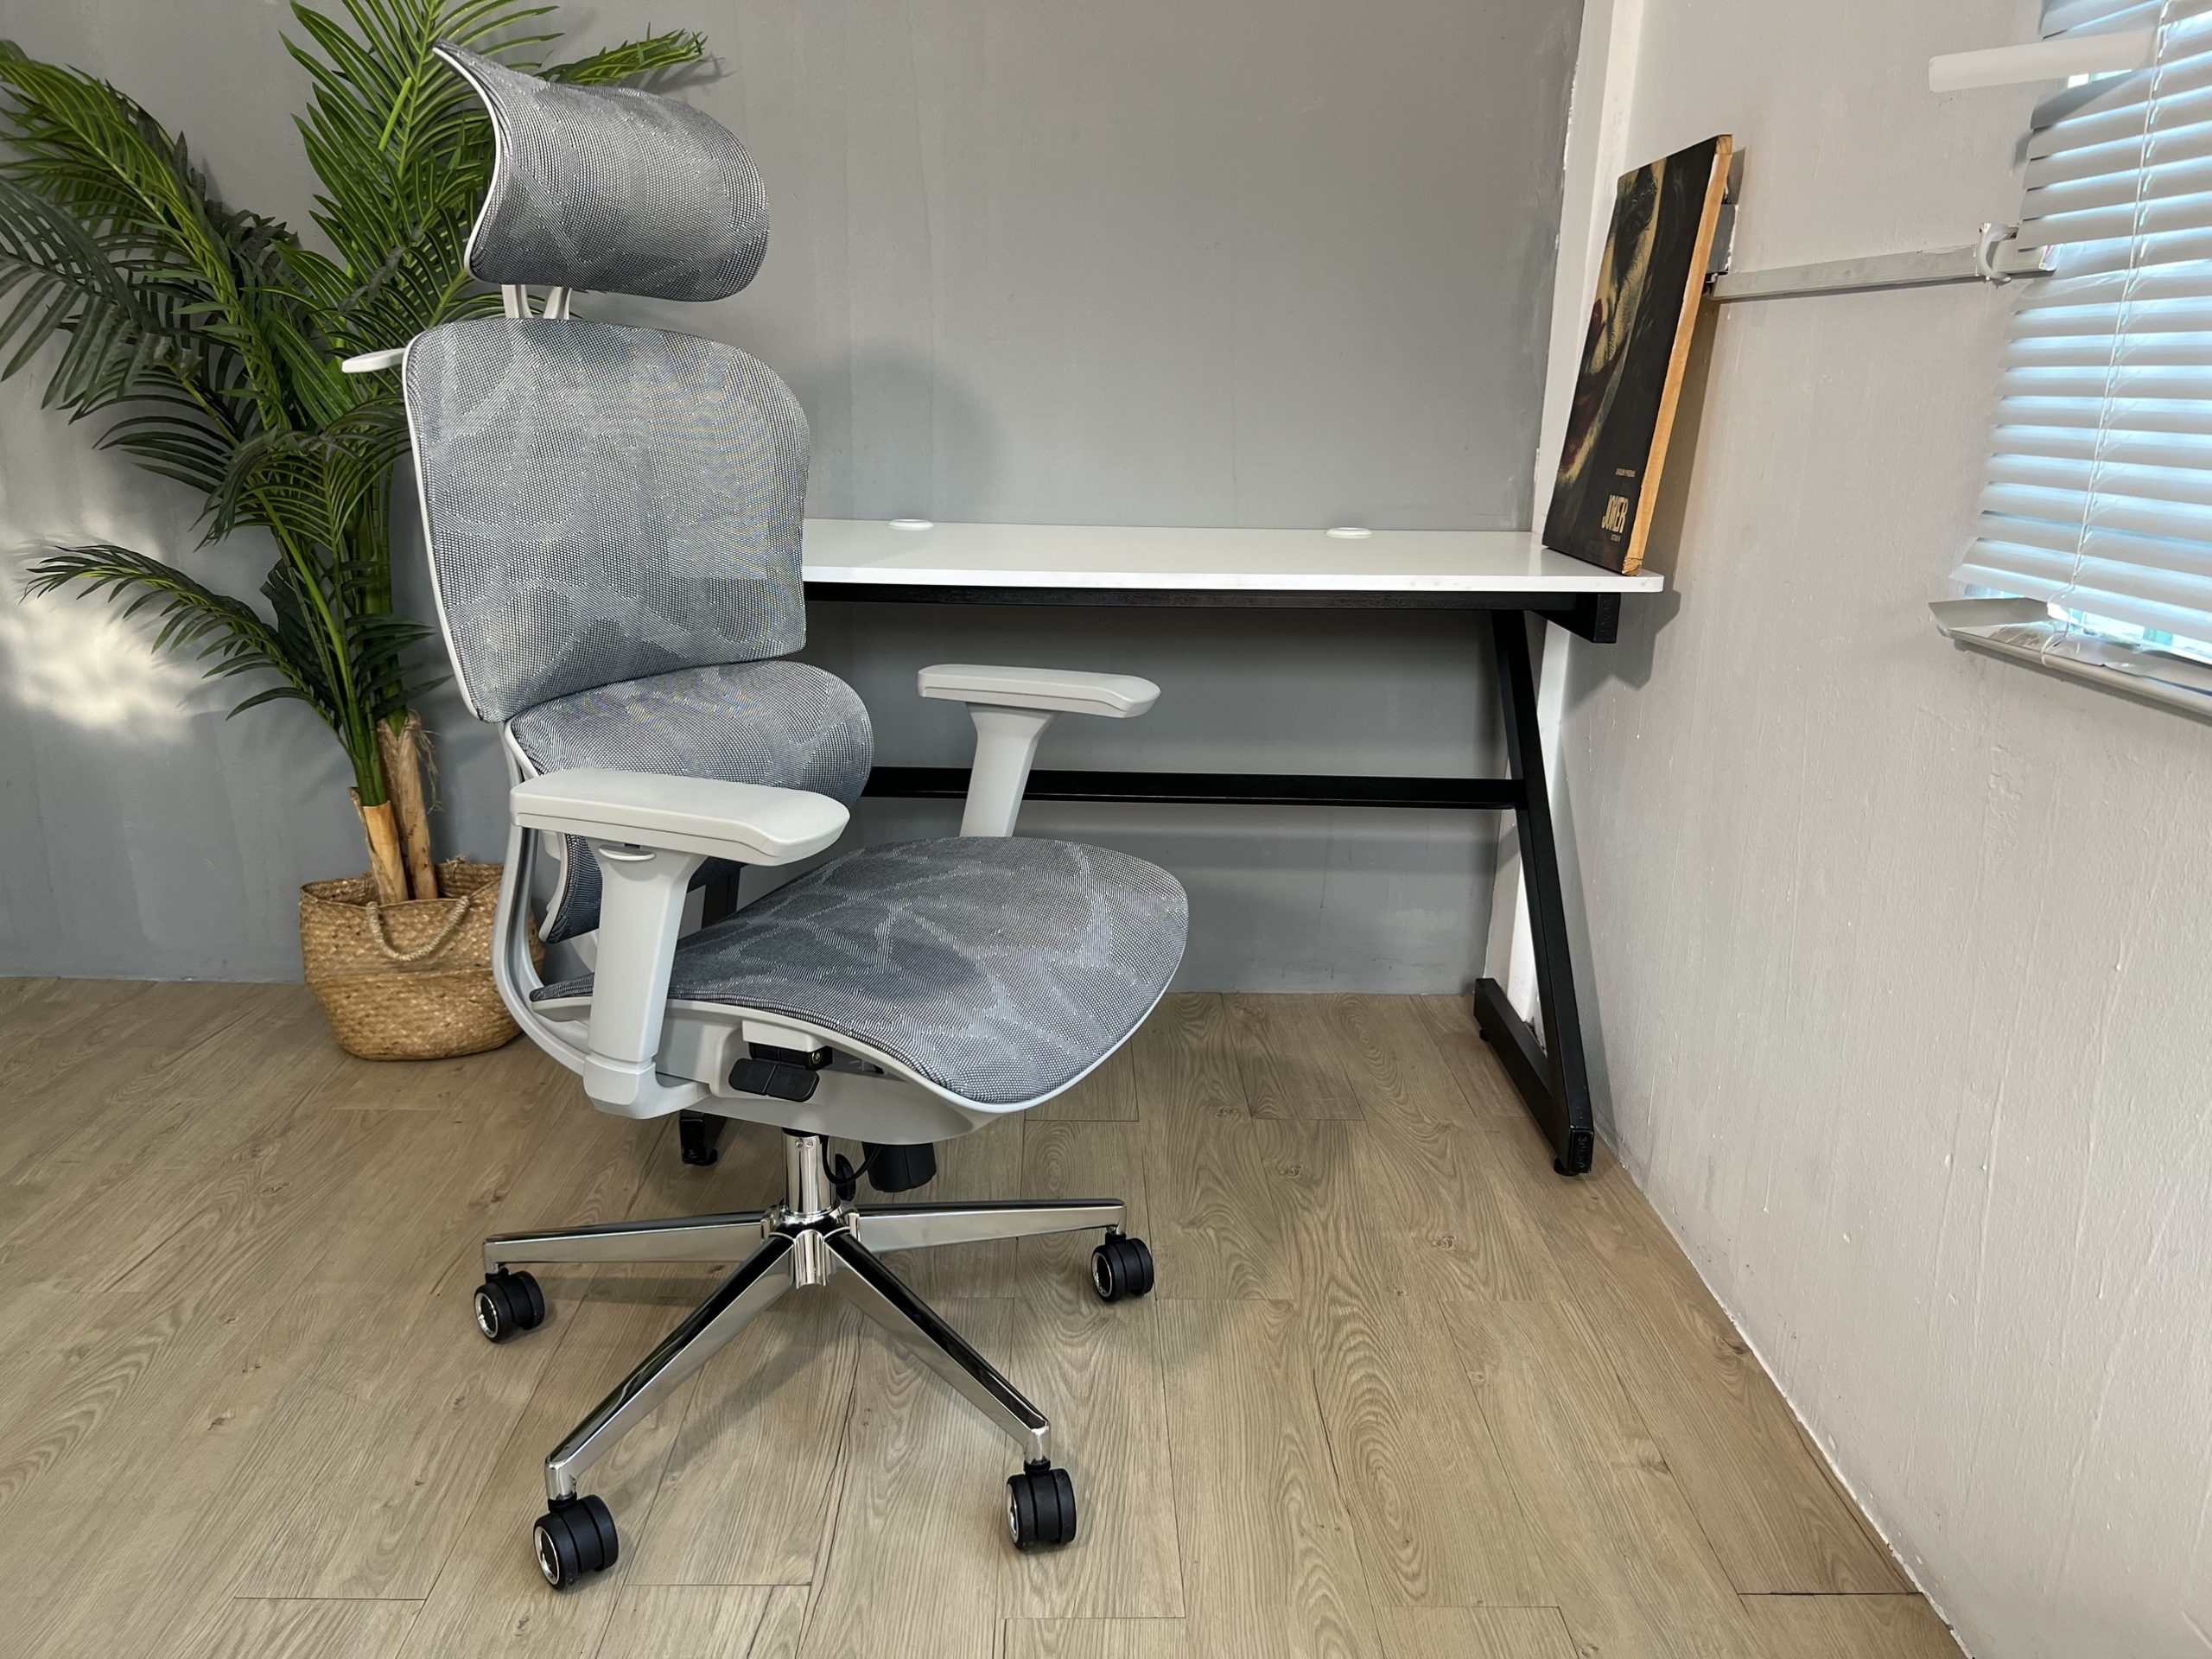 Ergonomic Office Chair VFJO-893